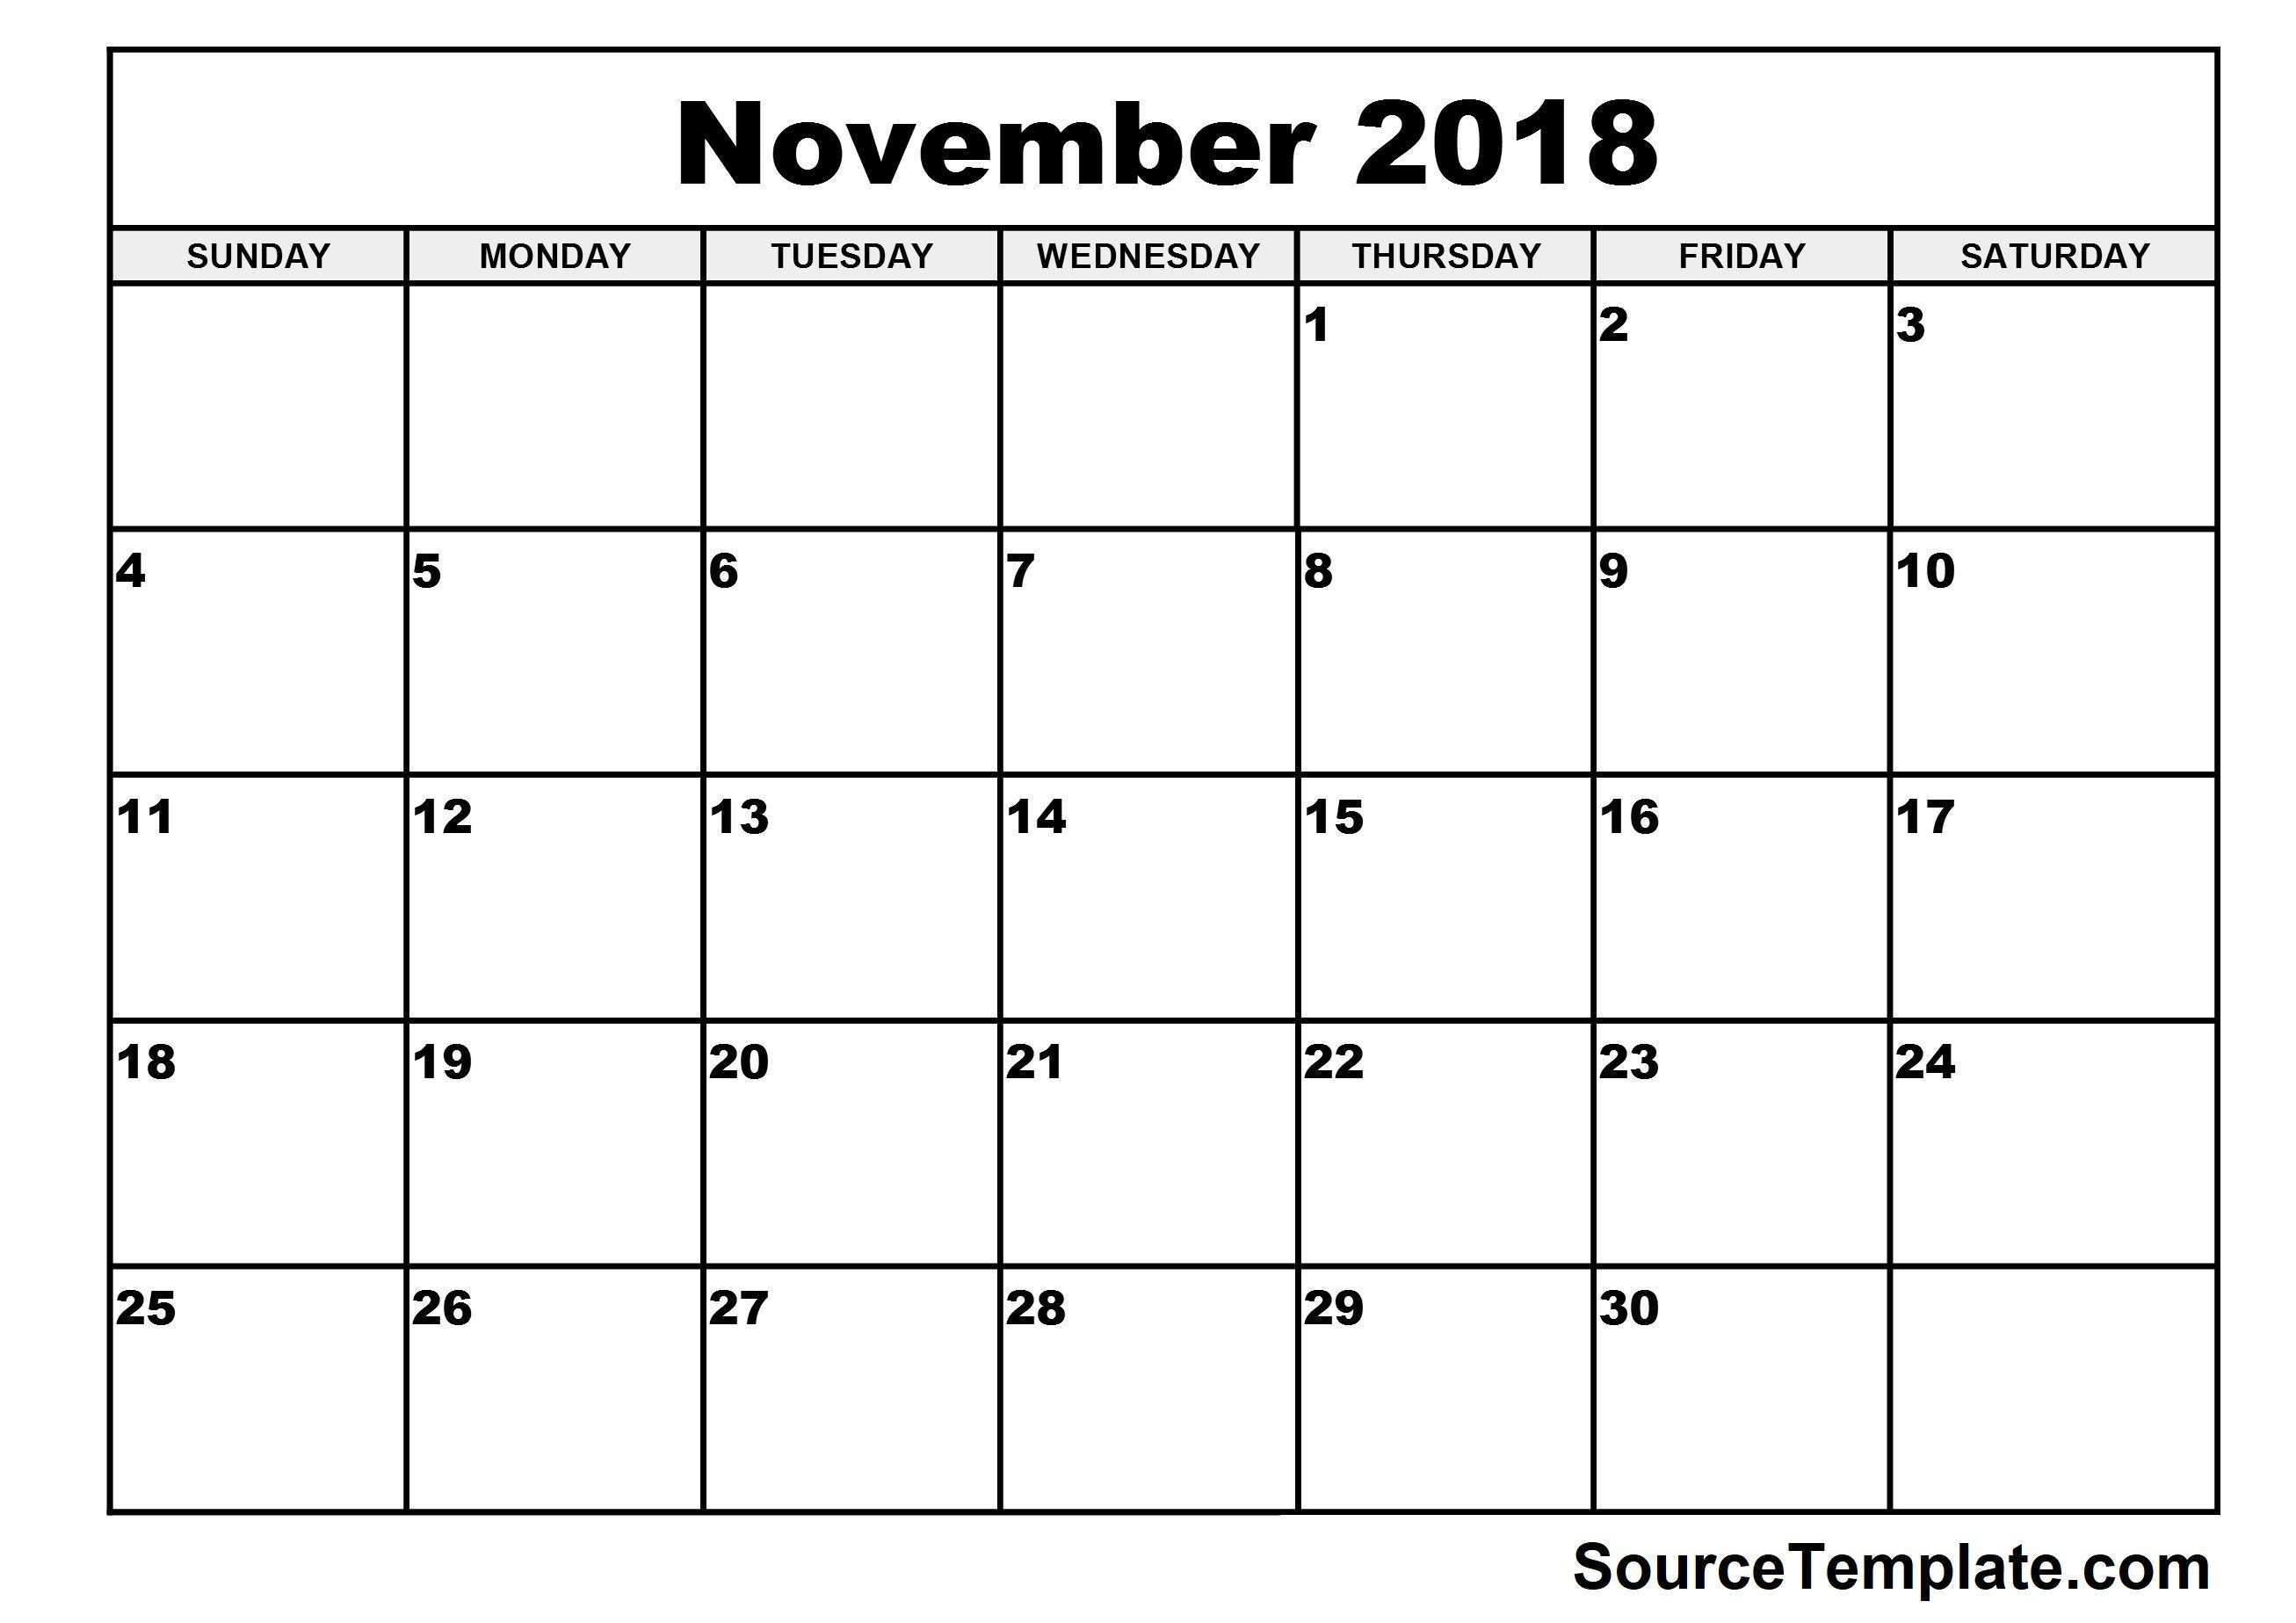 Free 5 November 2018 Calendar Printable Template Source Template November Printable Calendar November Calendar January 2018 Calendar Printable